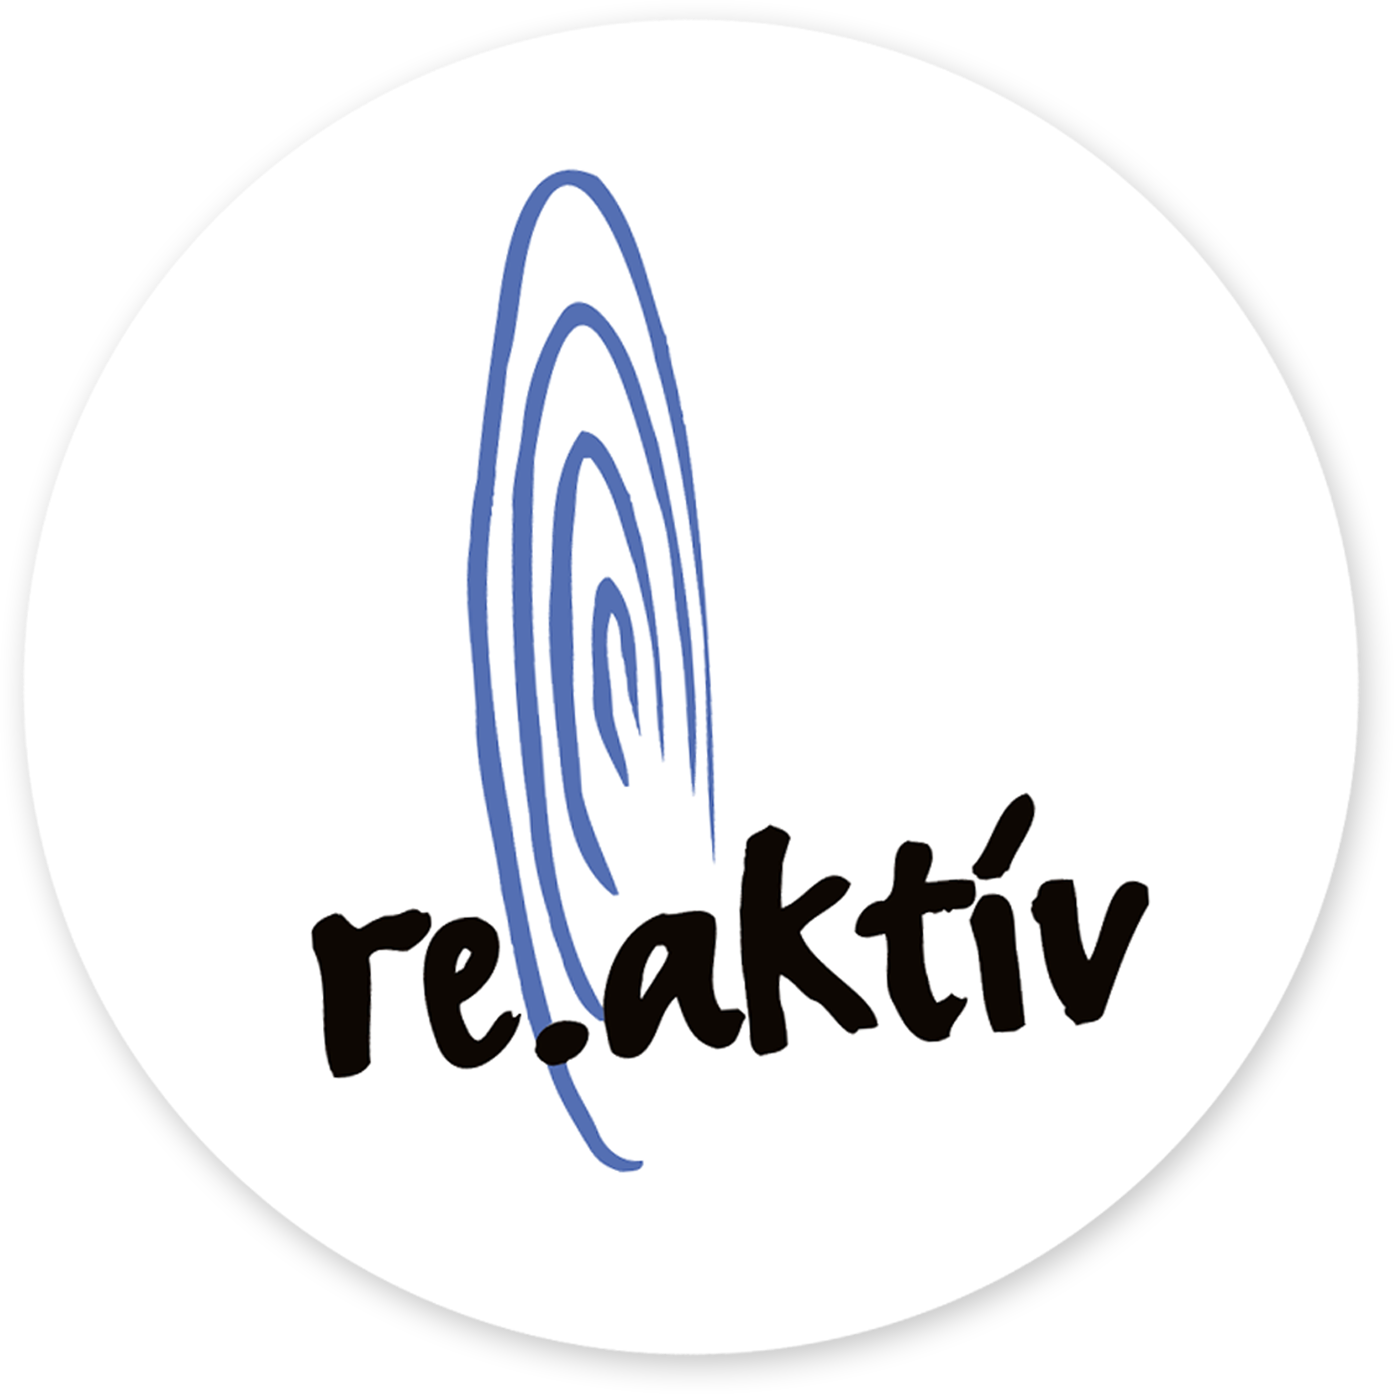 reaktiv-logo-02-3